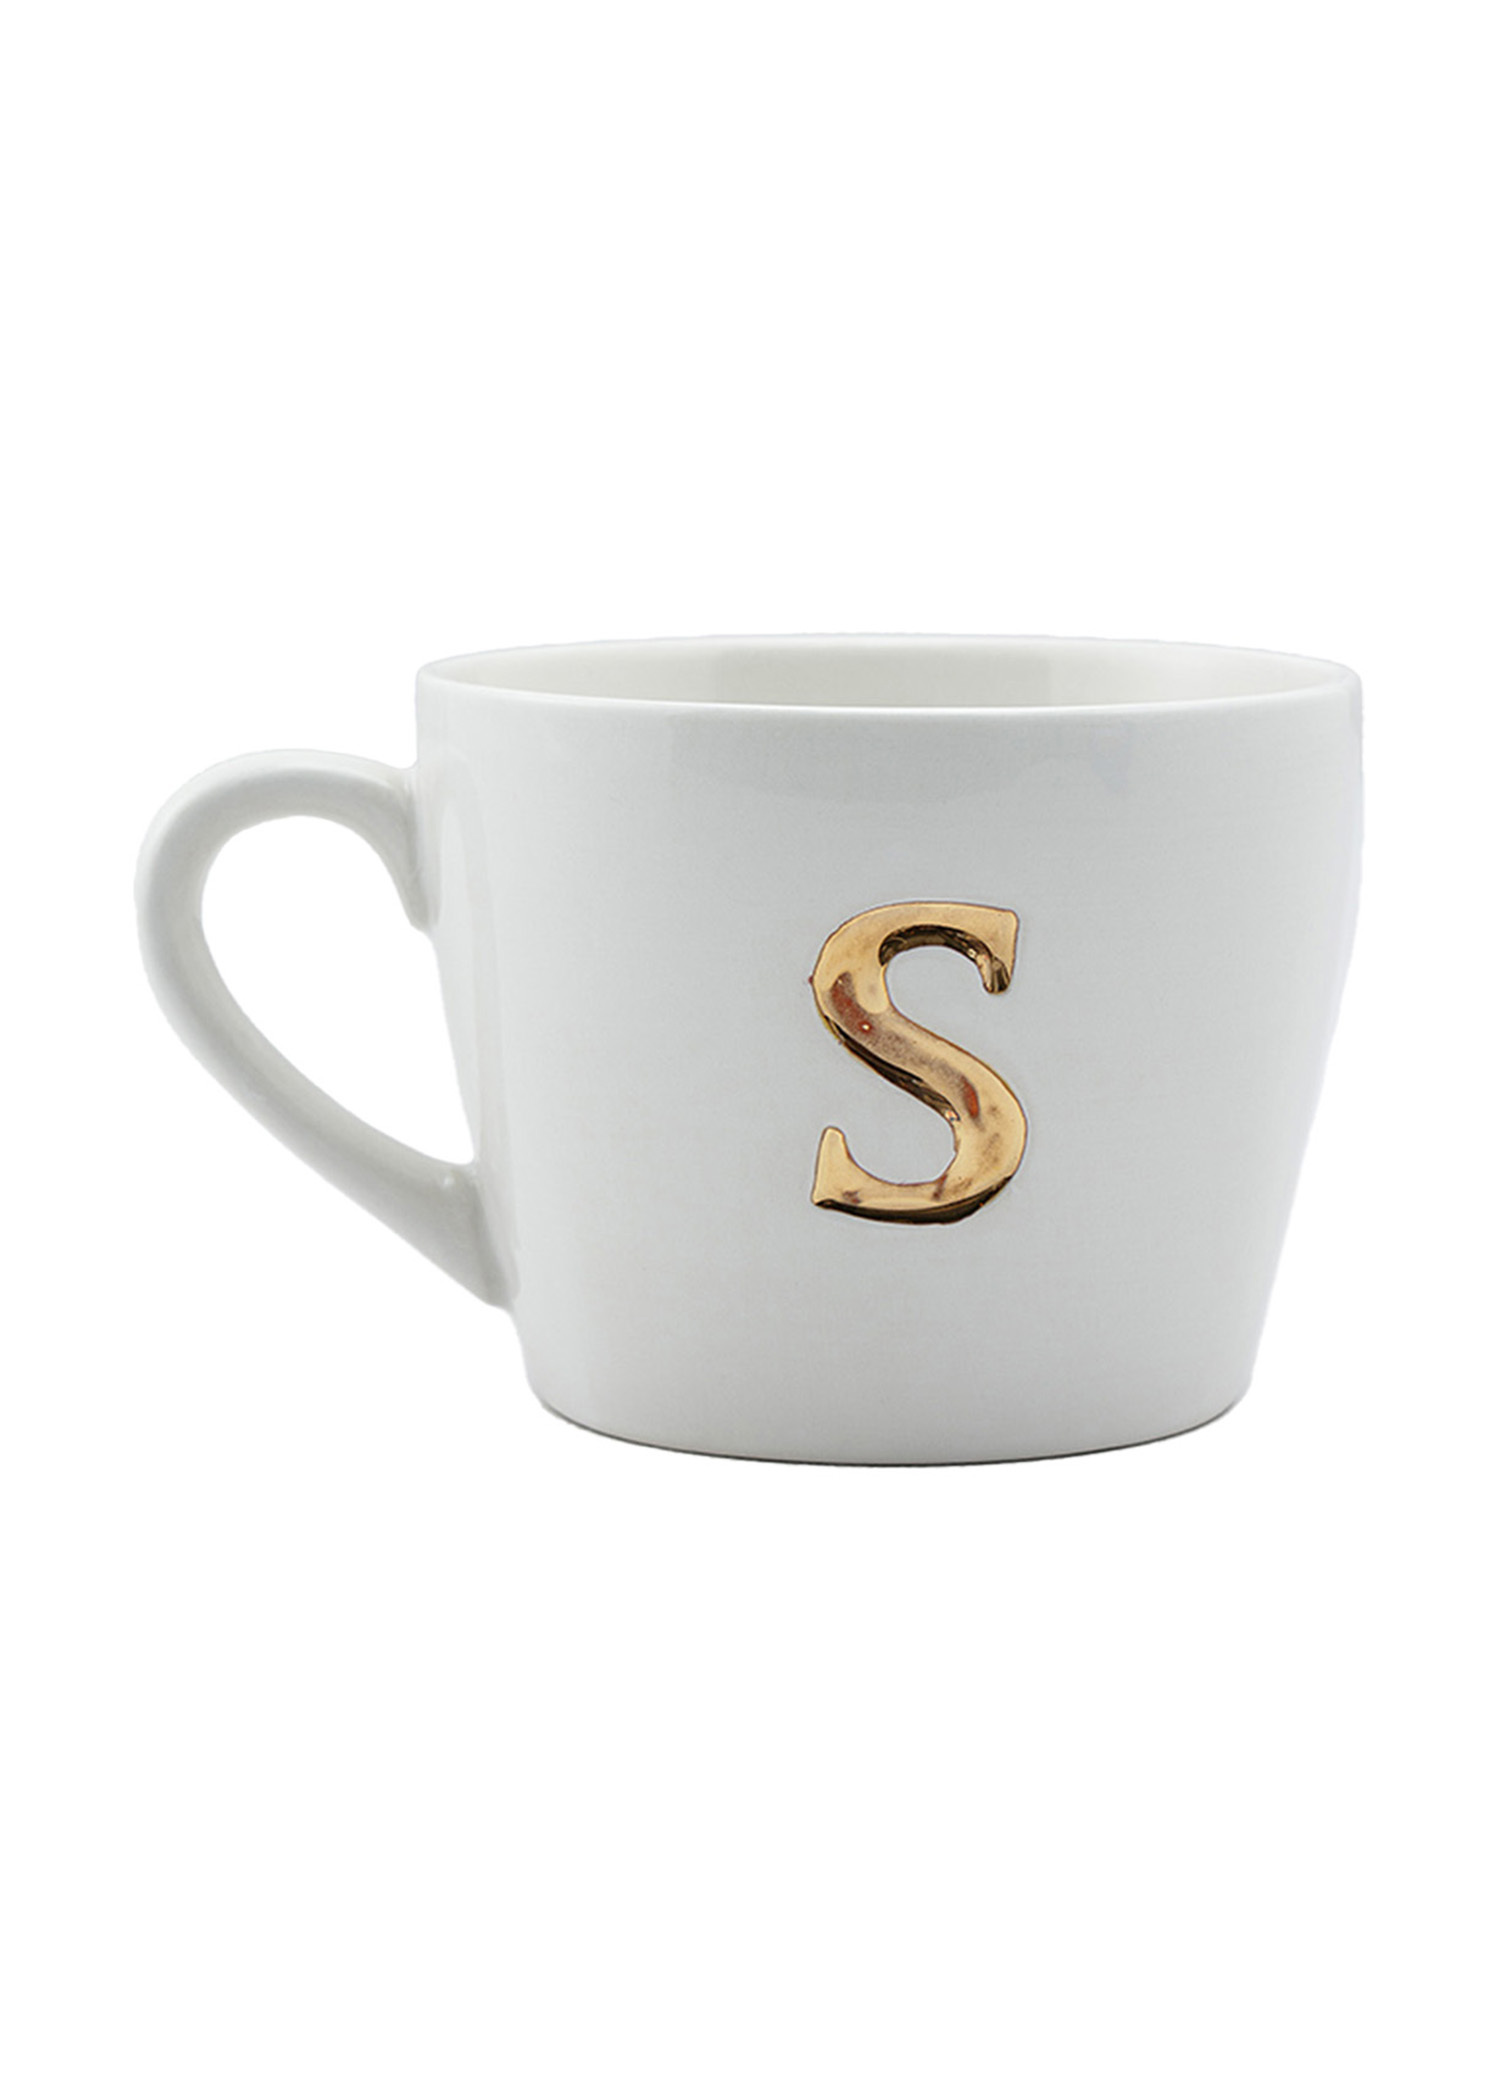 Monogram mug